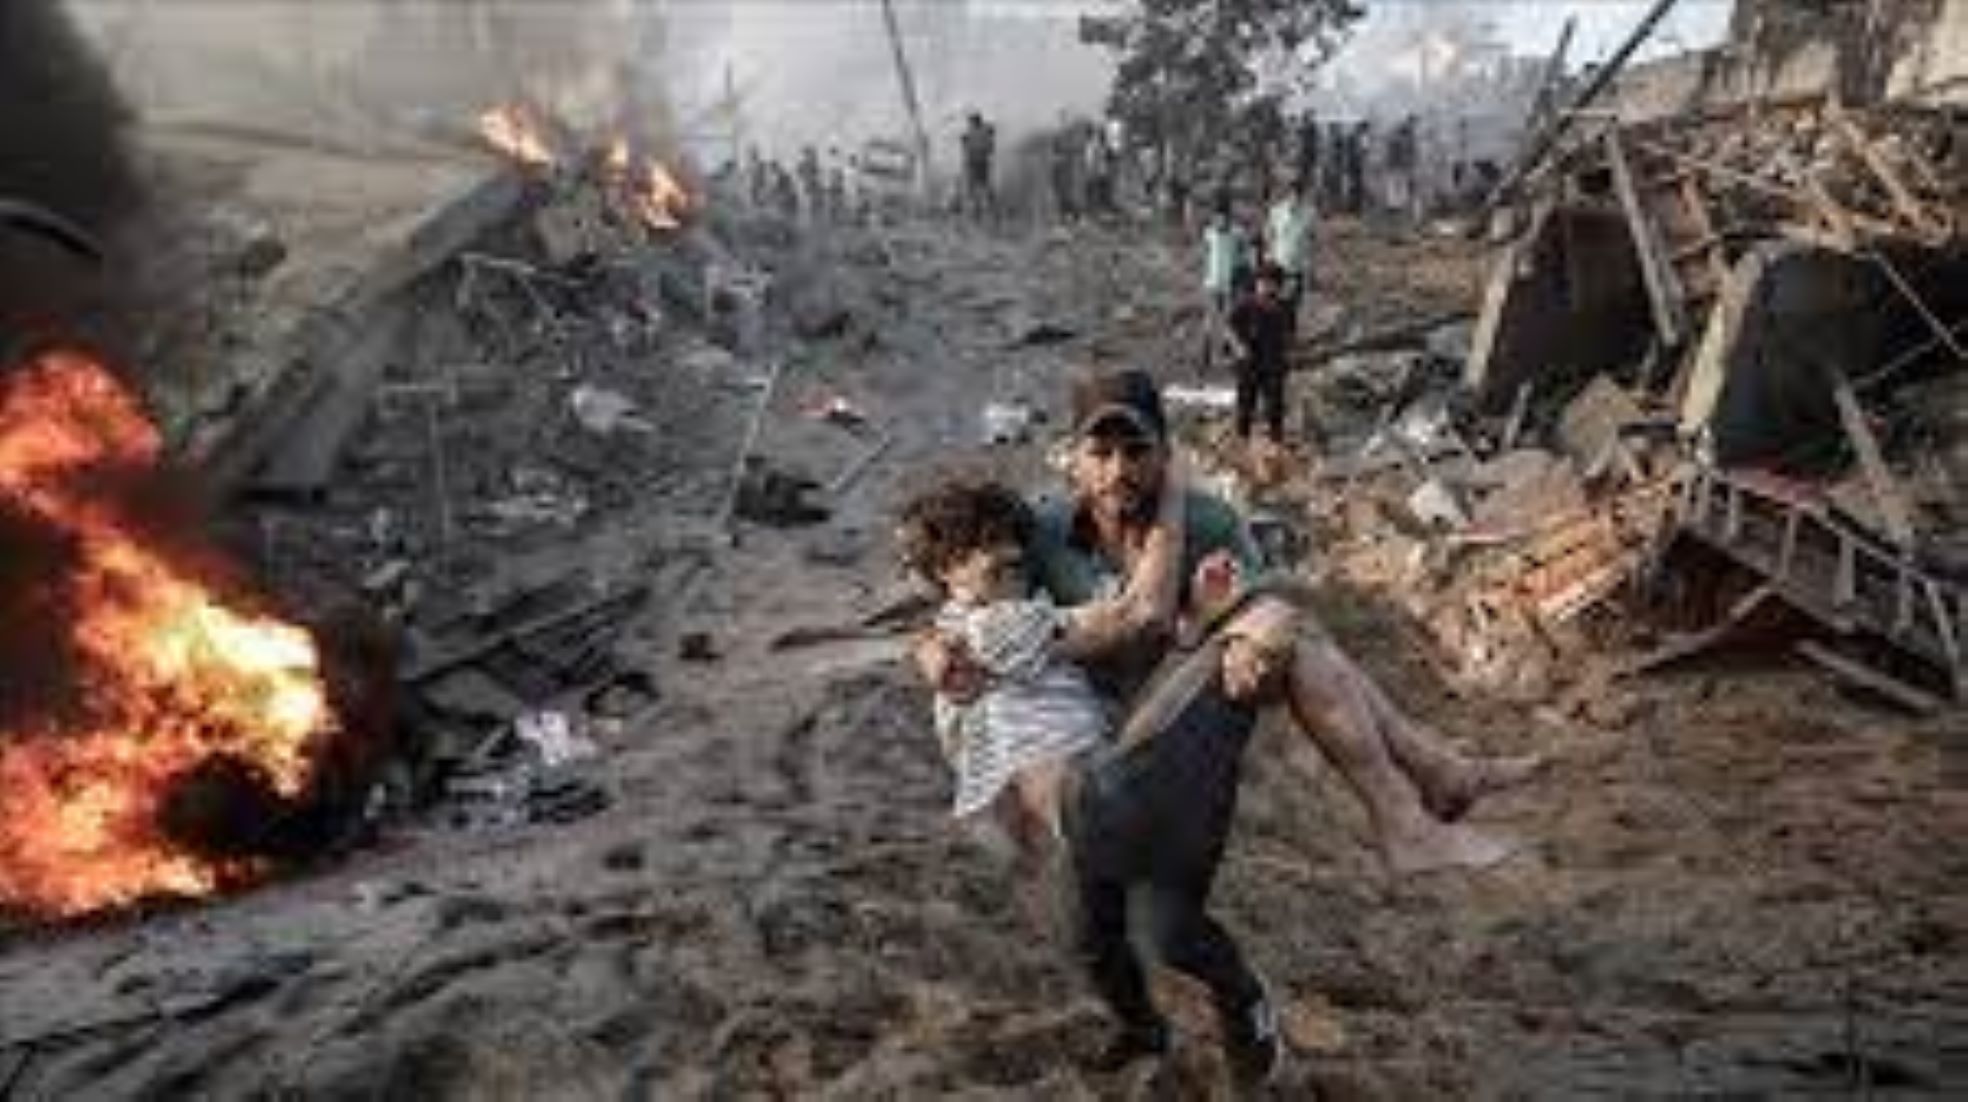 Global Parliamentary Leaders Call For Immediate Ceasefire In Gaza